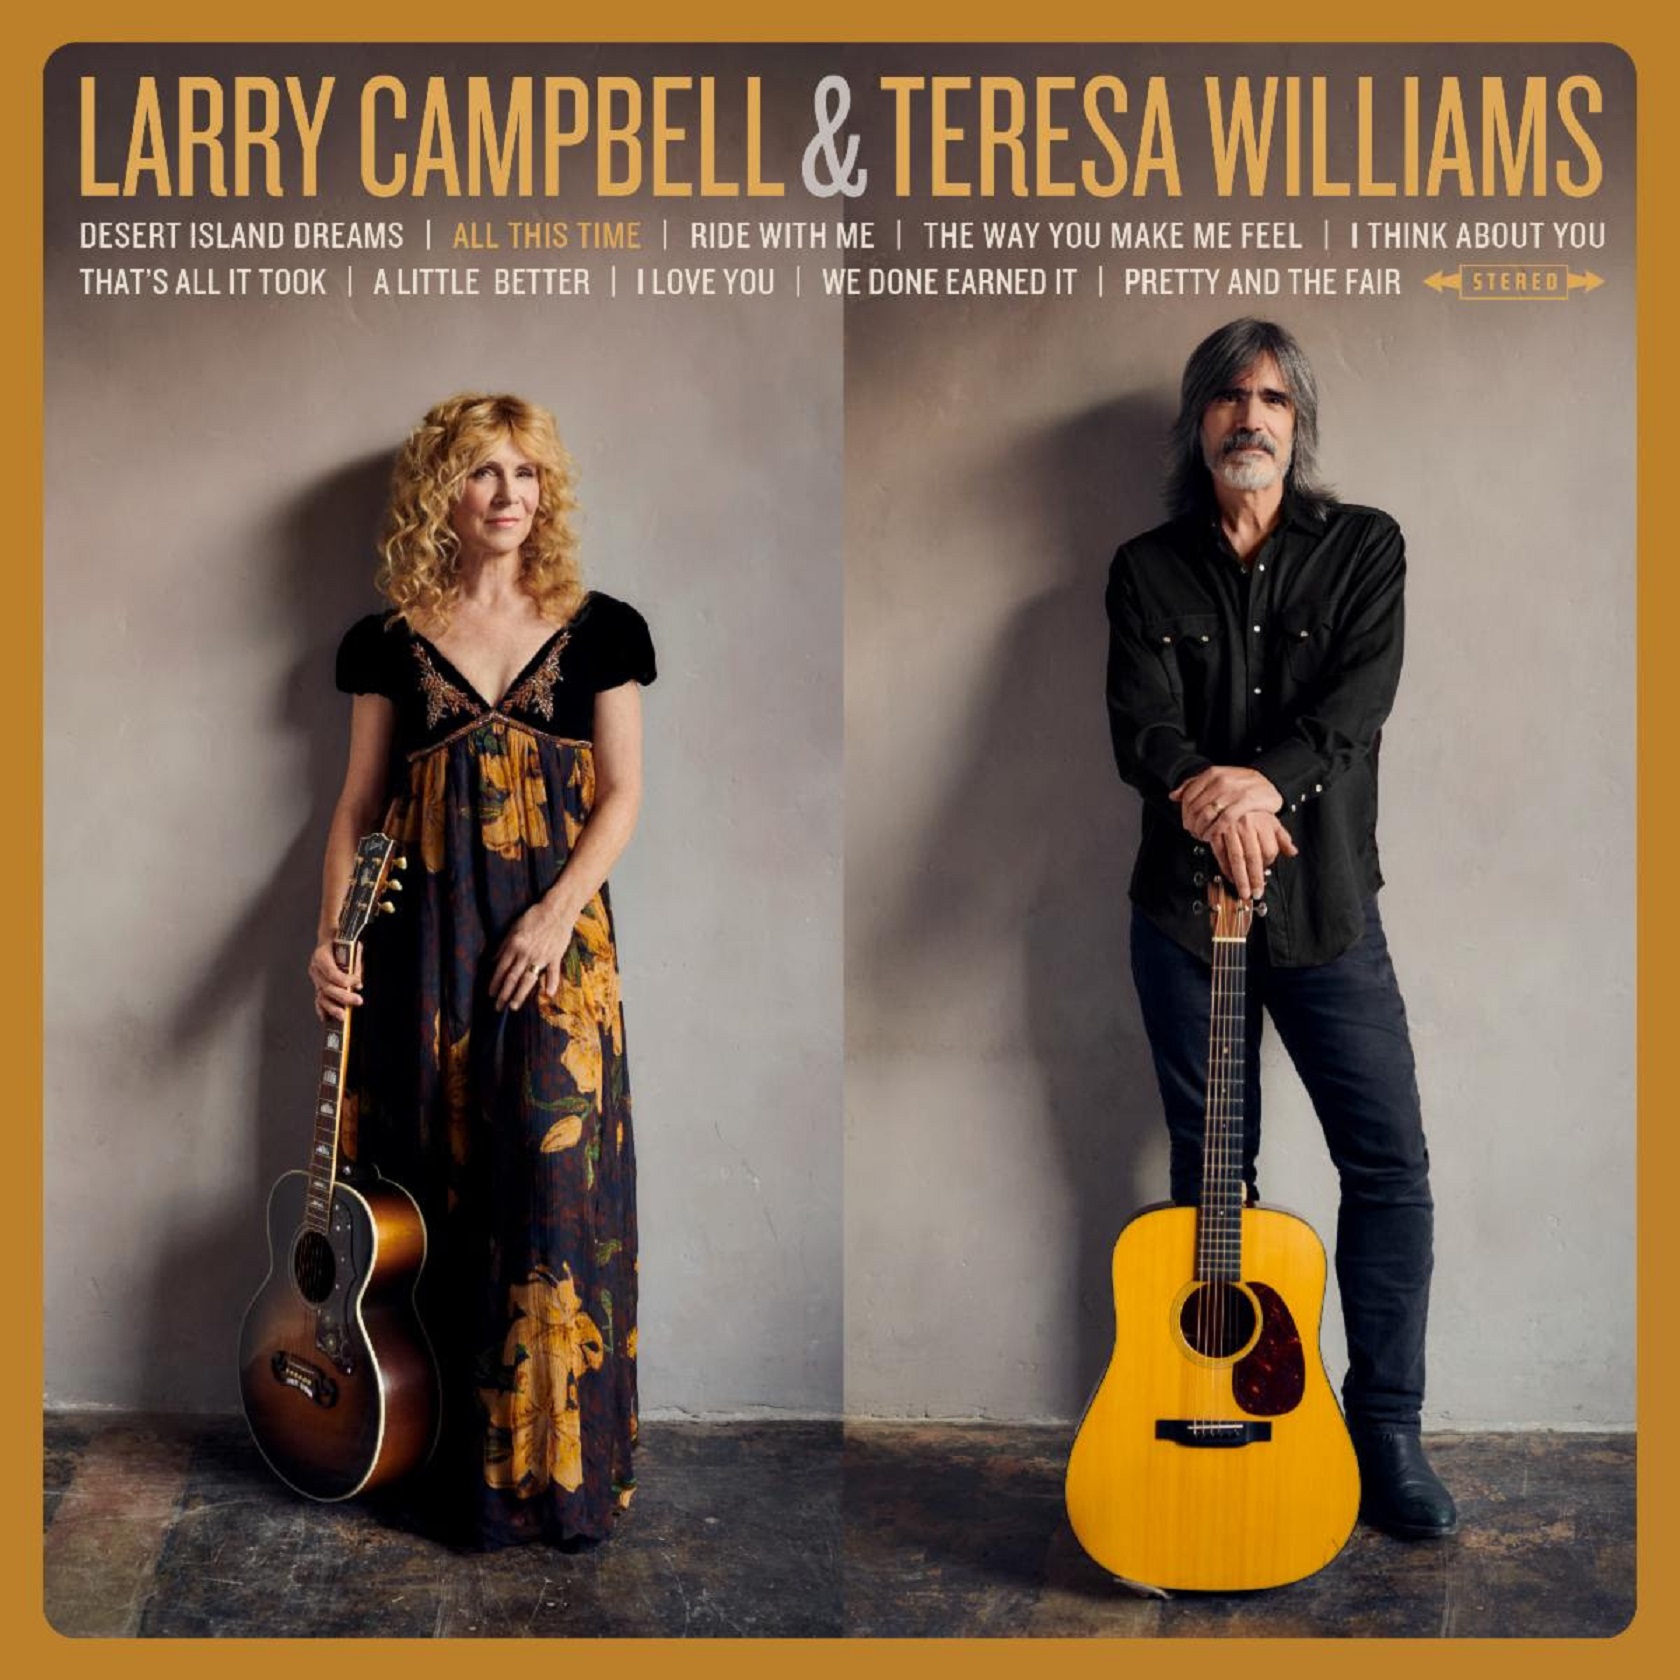 Larry Campbell & Teresa Williams unveil new studio album 'All This Time'